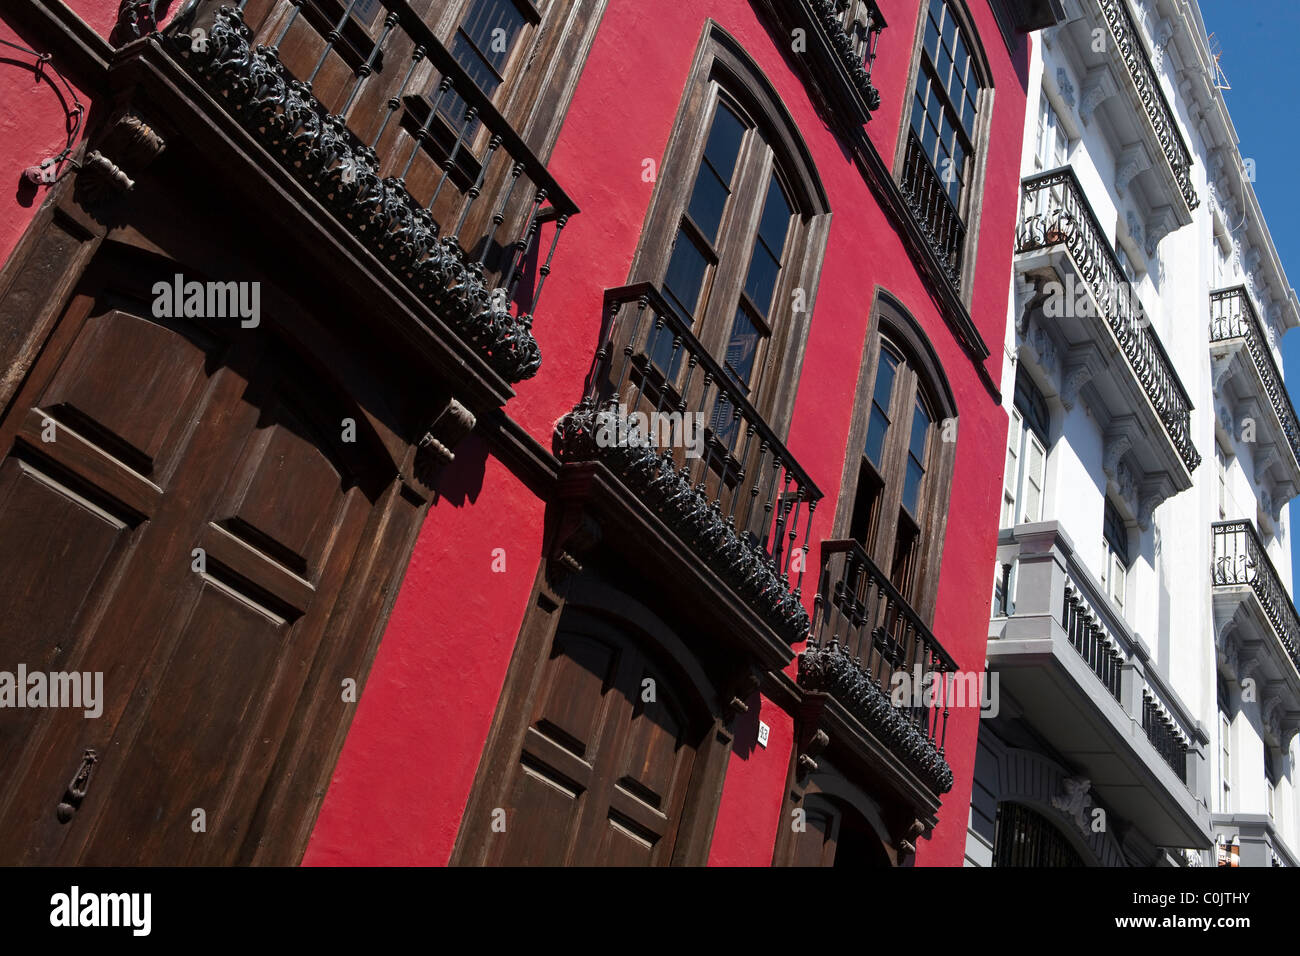 wooden doors red painted balconies Spanish street scene Stock Photo